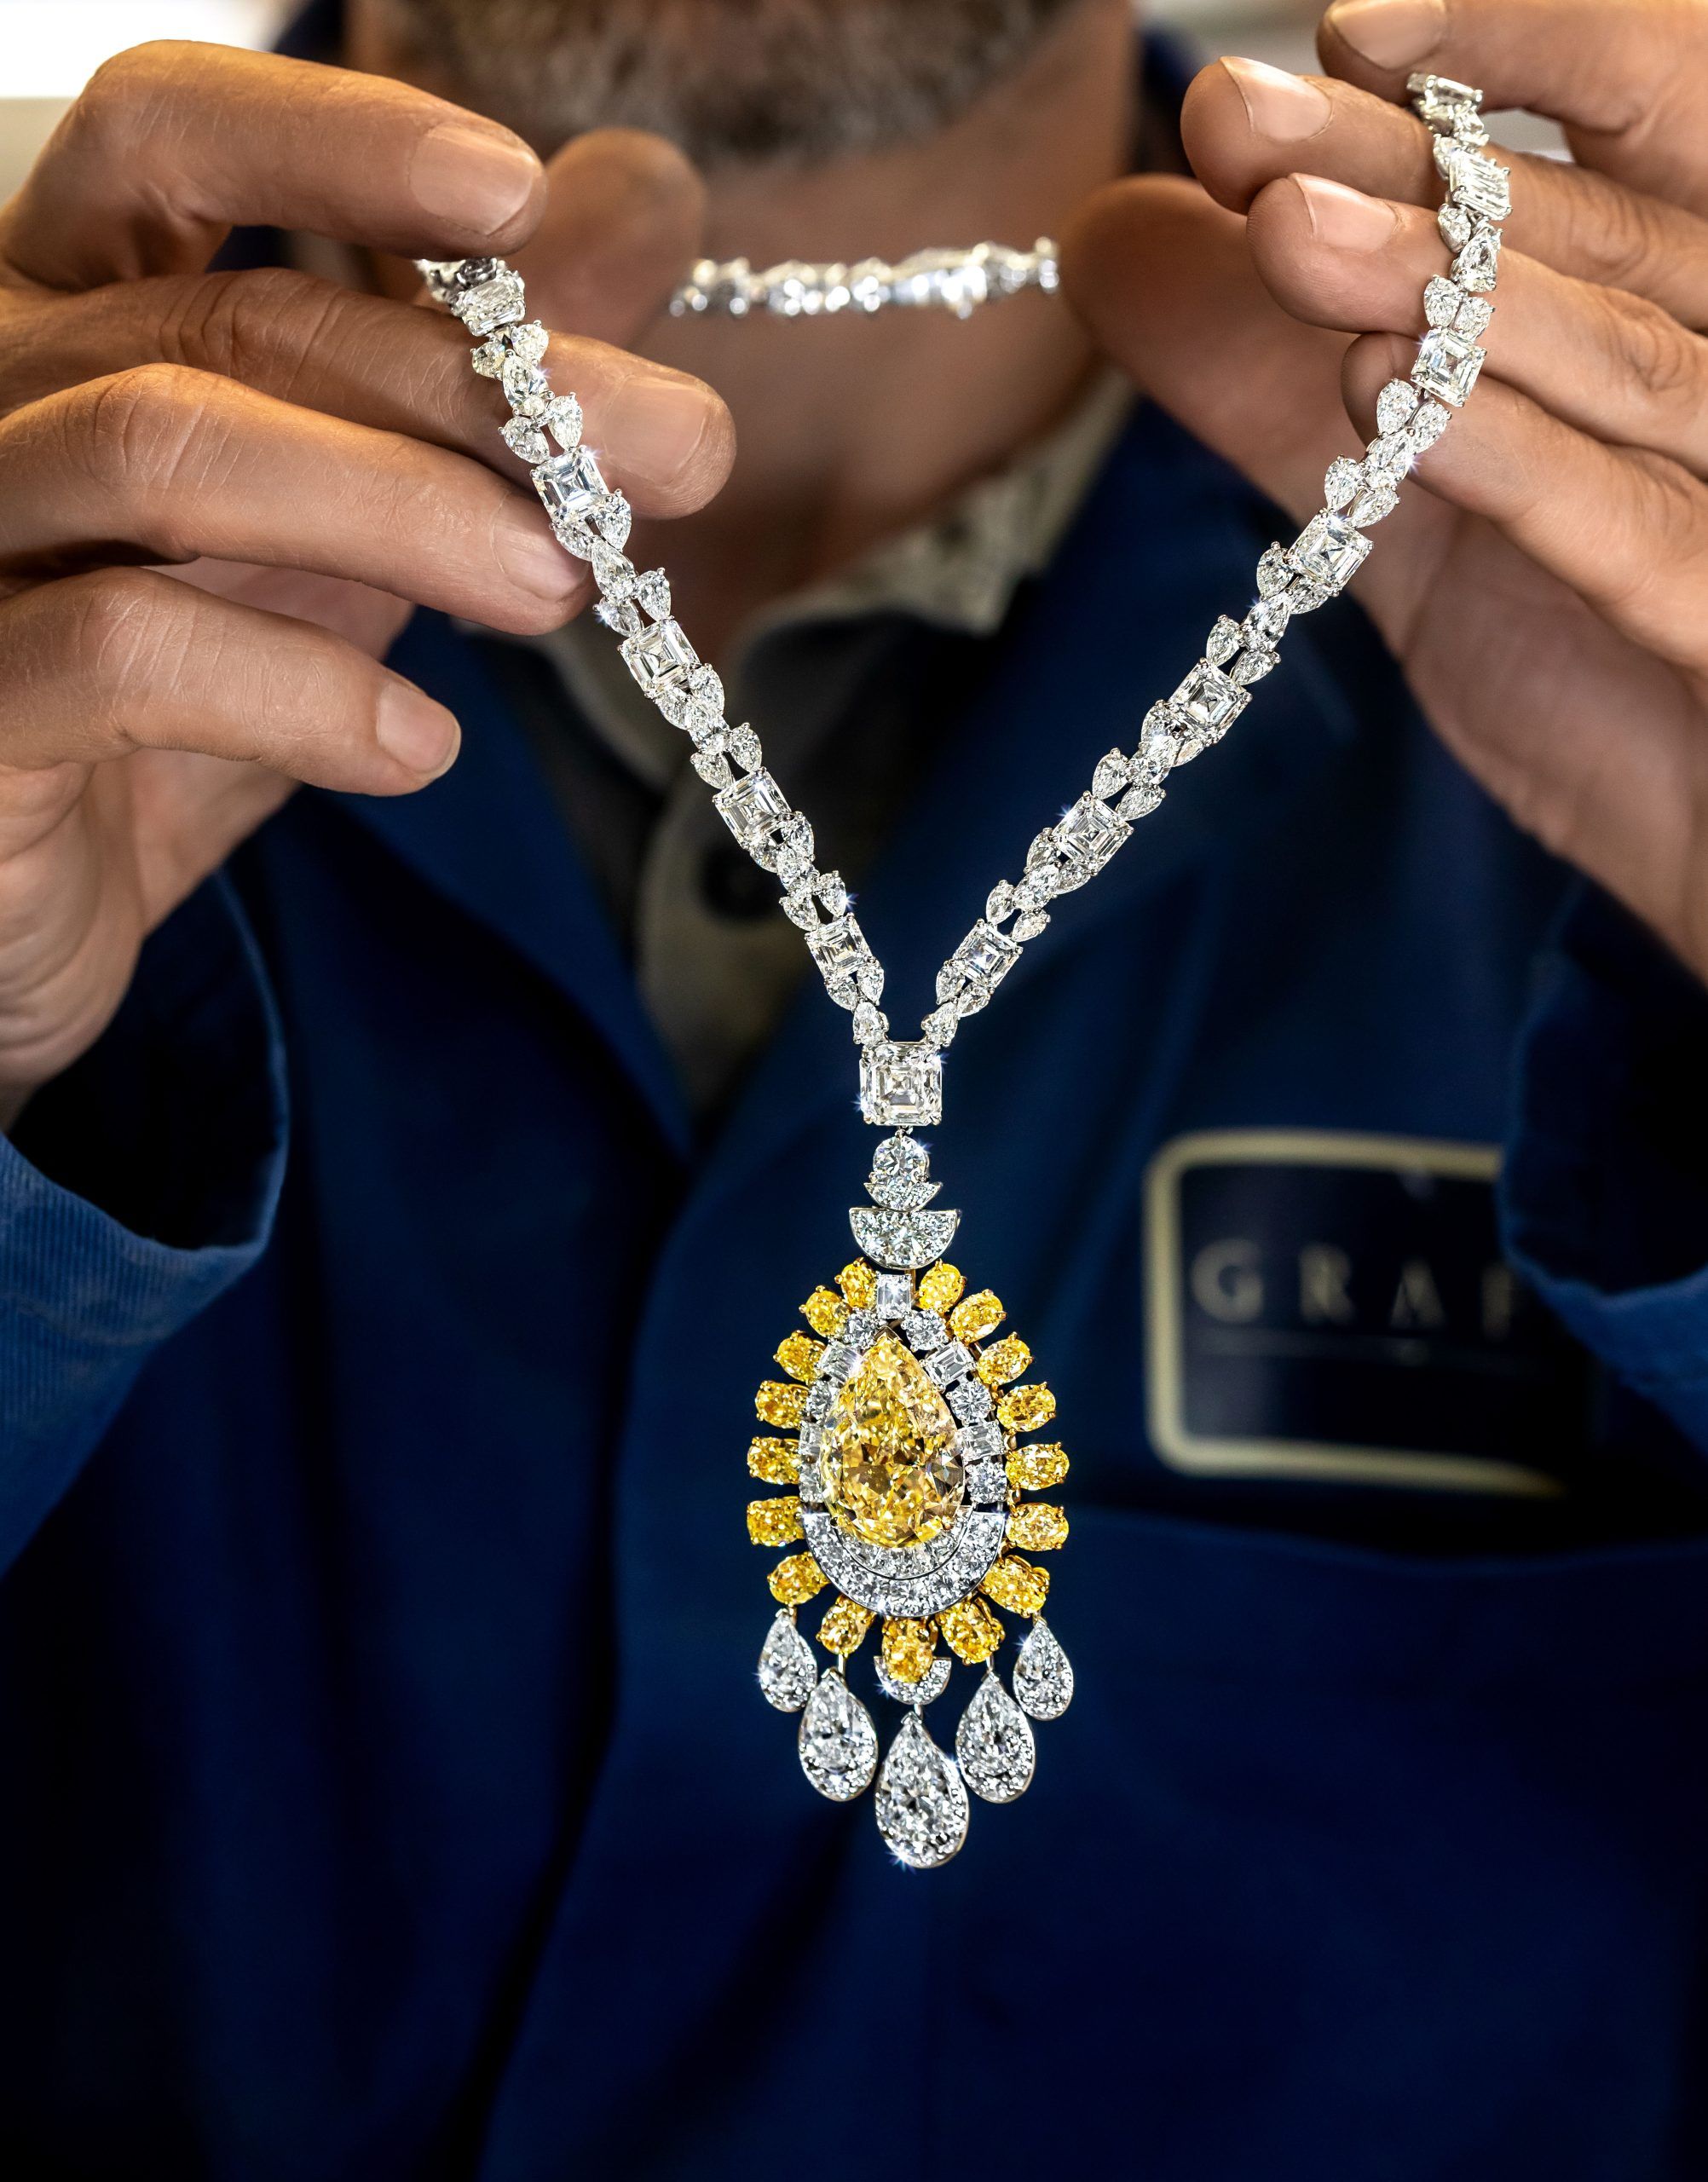 GRAFF Diamonds' Historic Legacy in the World of Luxury Jewellery